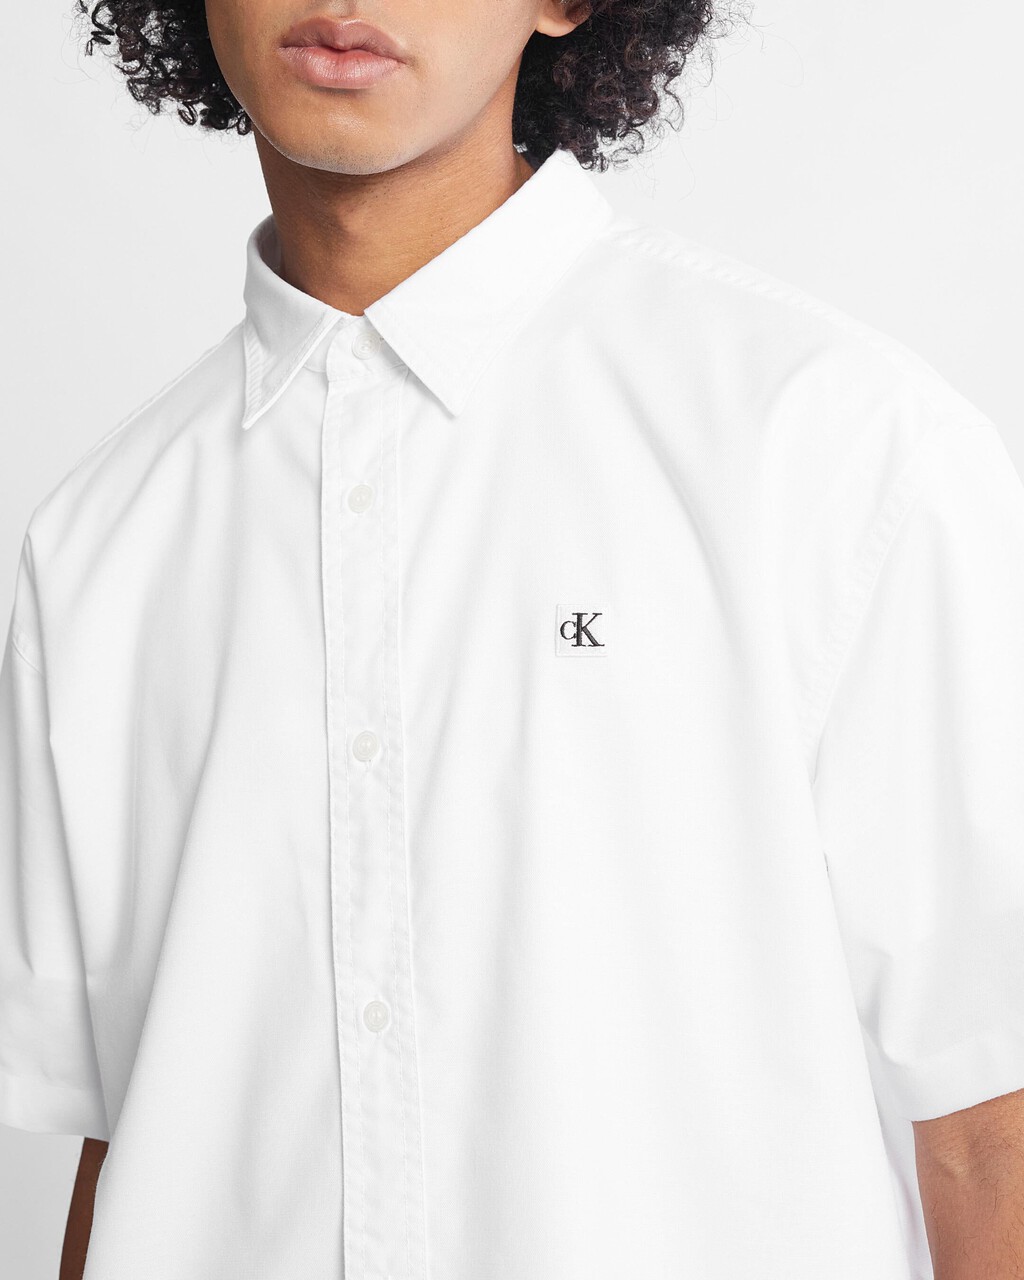 Ck Badge Coolmax Oxford Shirt, Bright White, hi-res